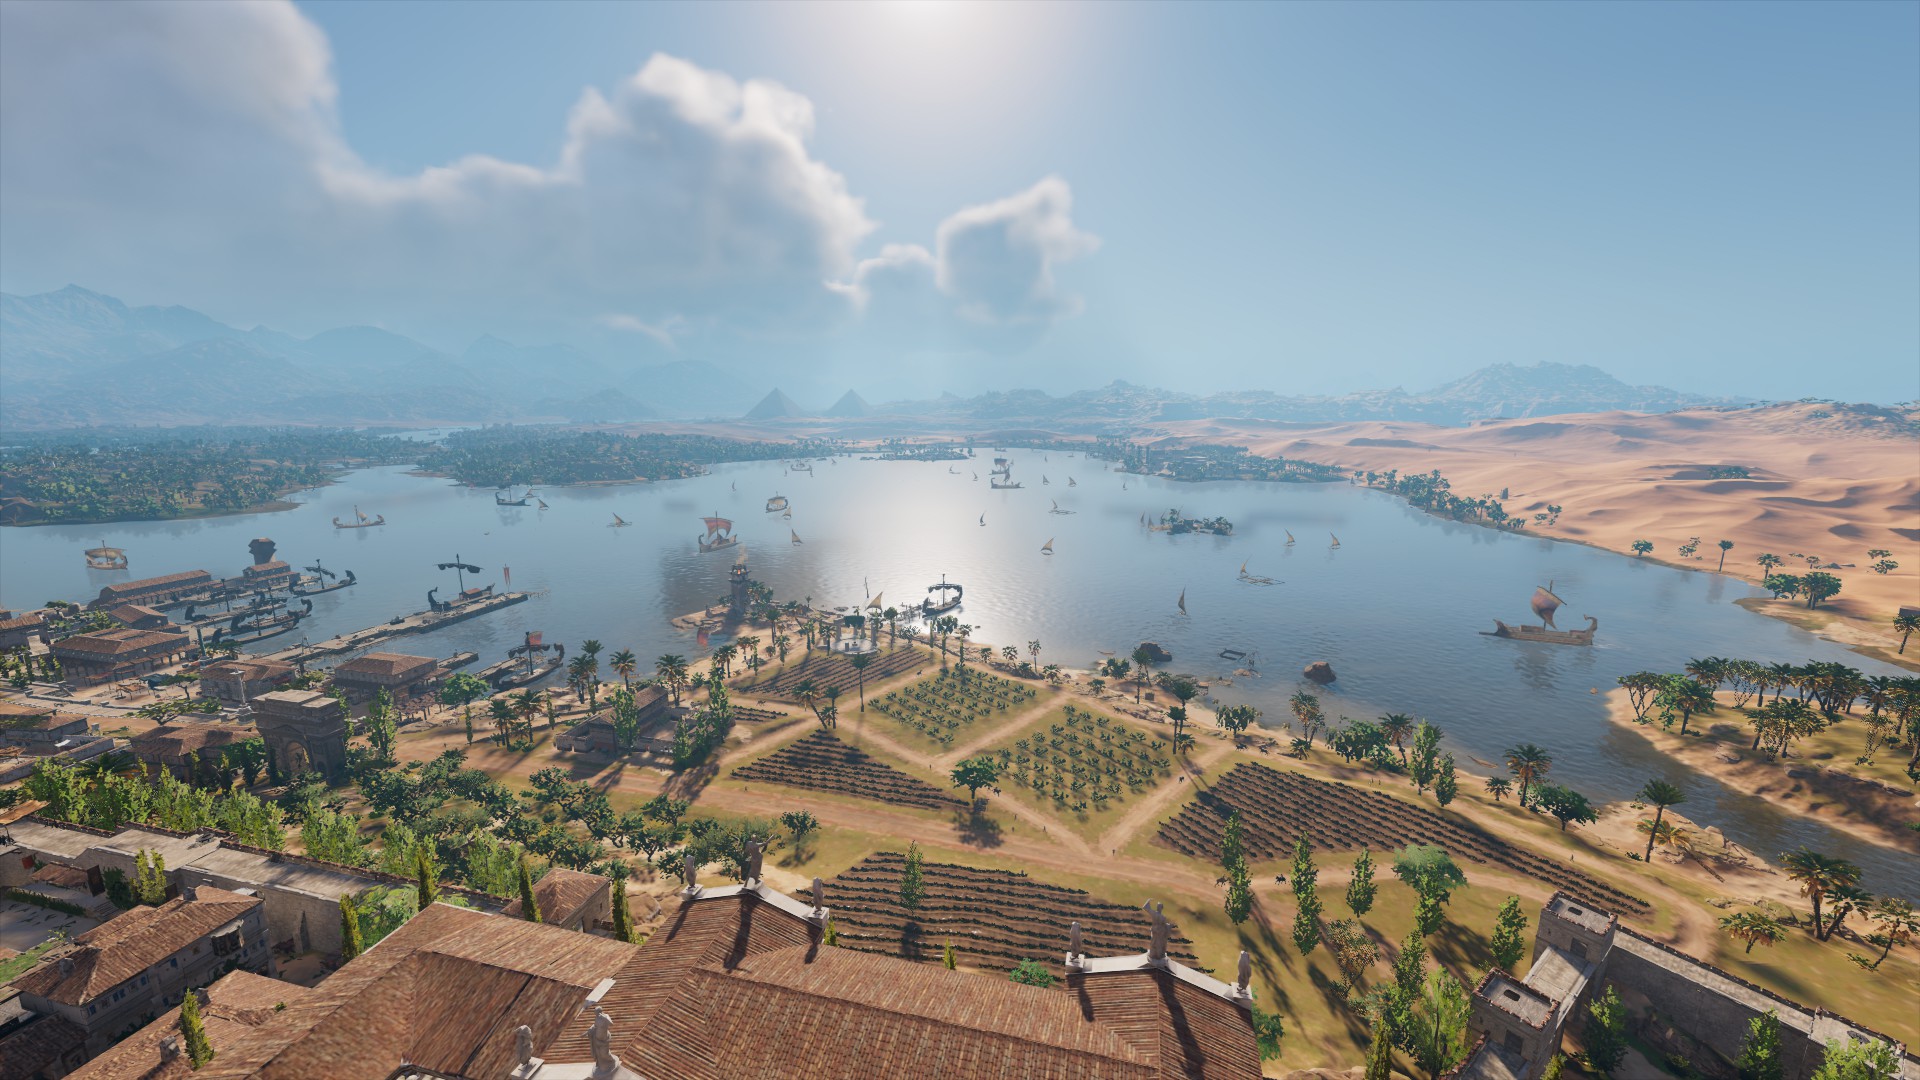 Lake Mareotis | Assassin's Creed Wiki | Fandom